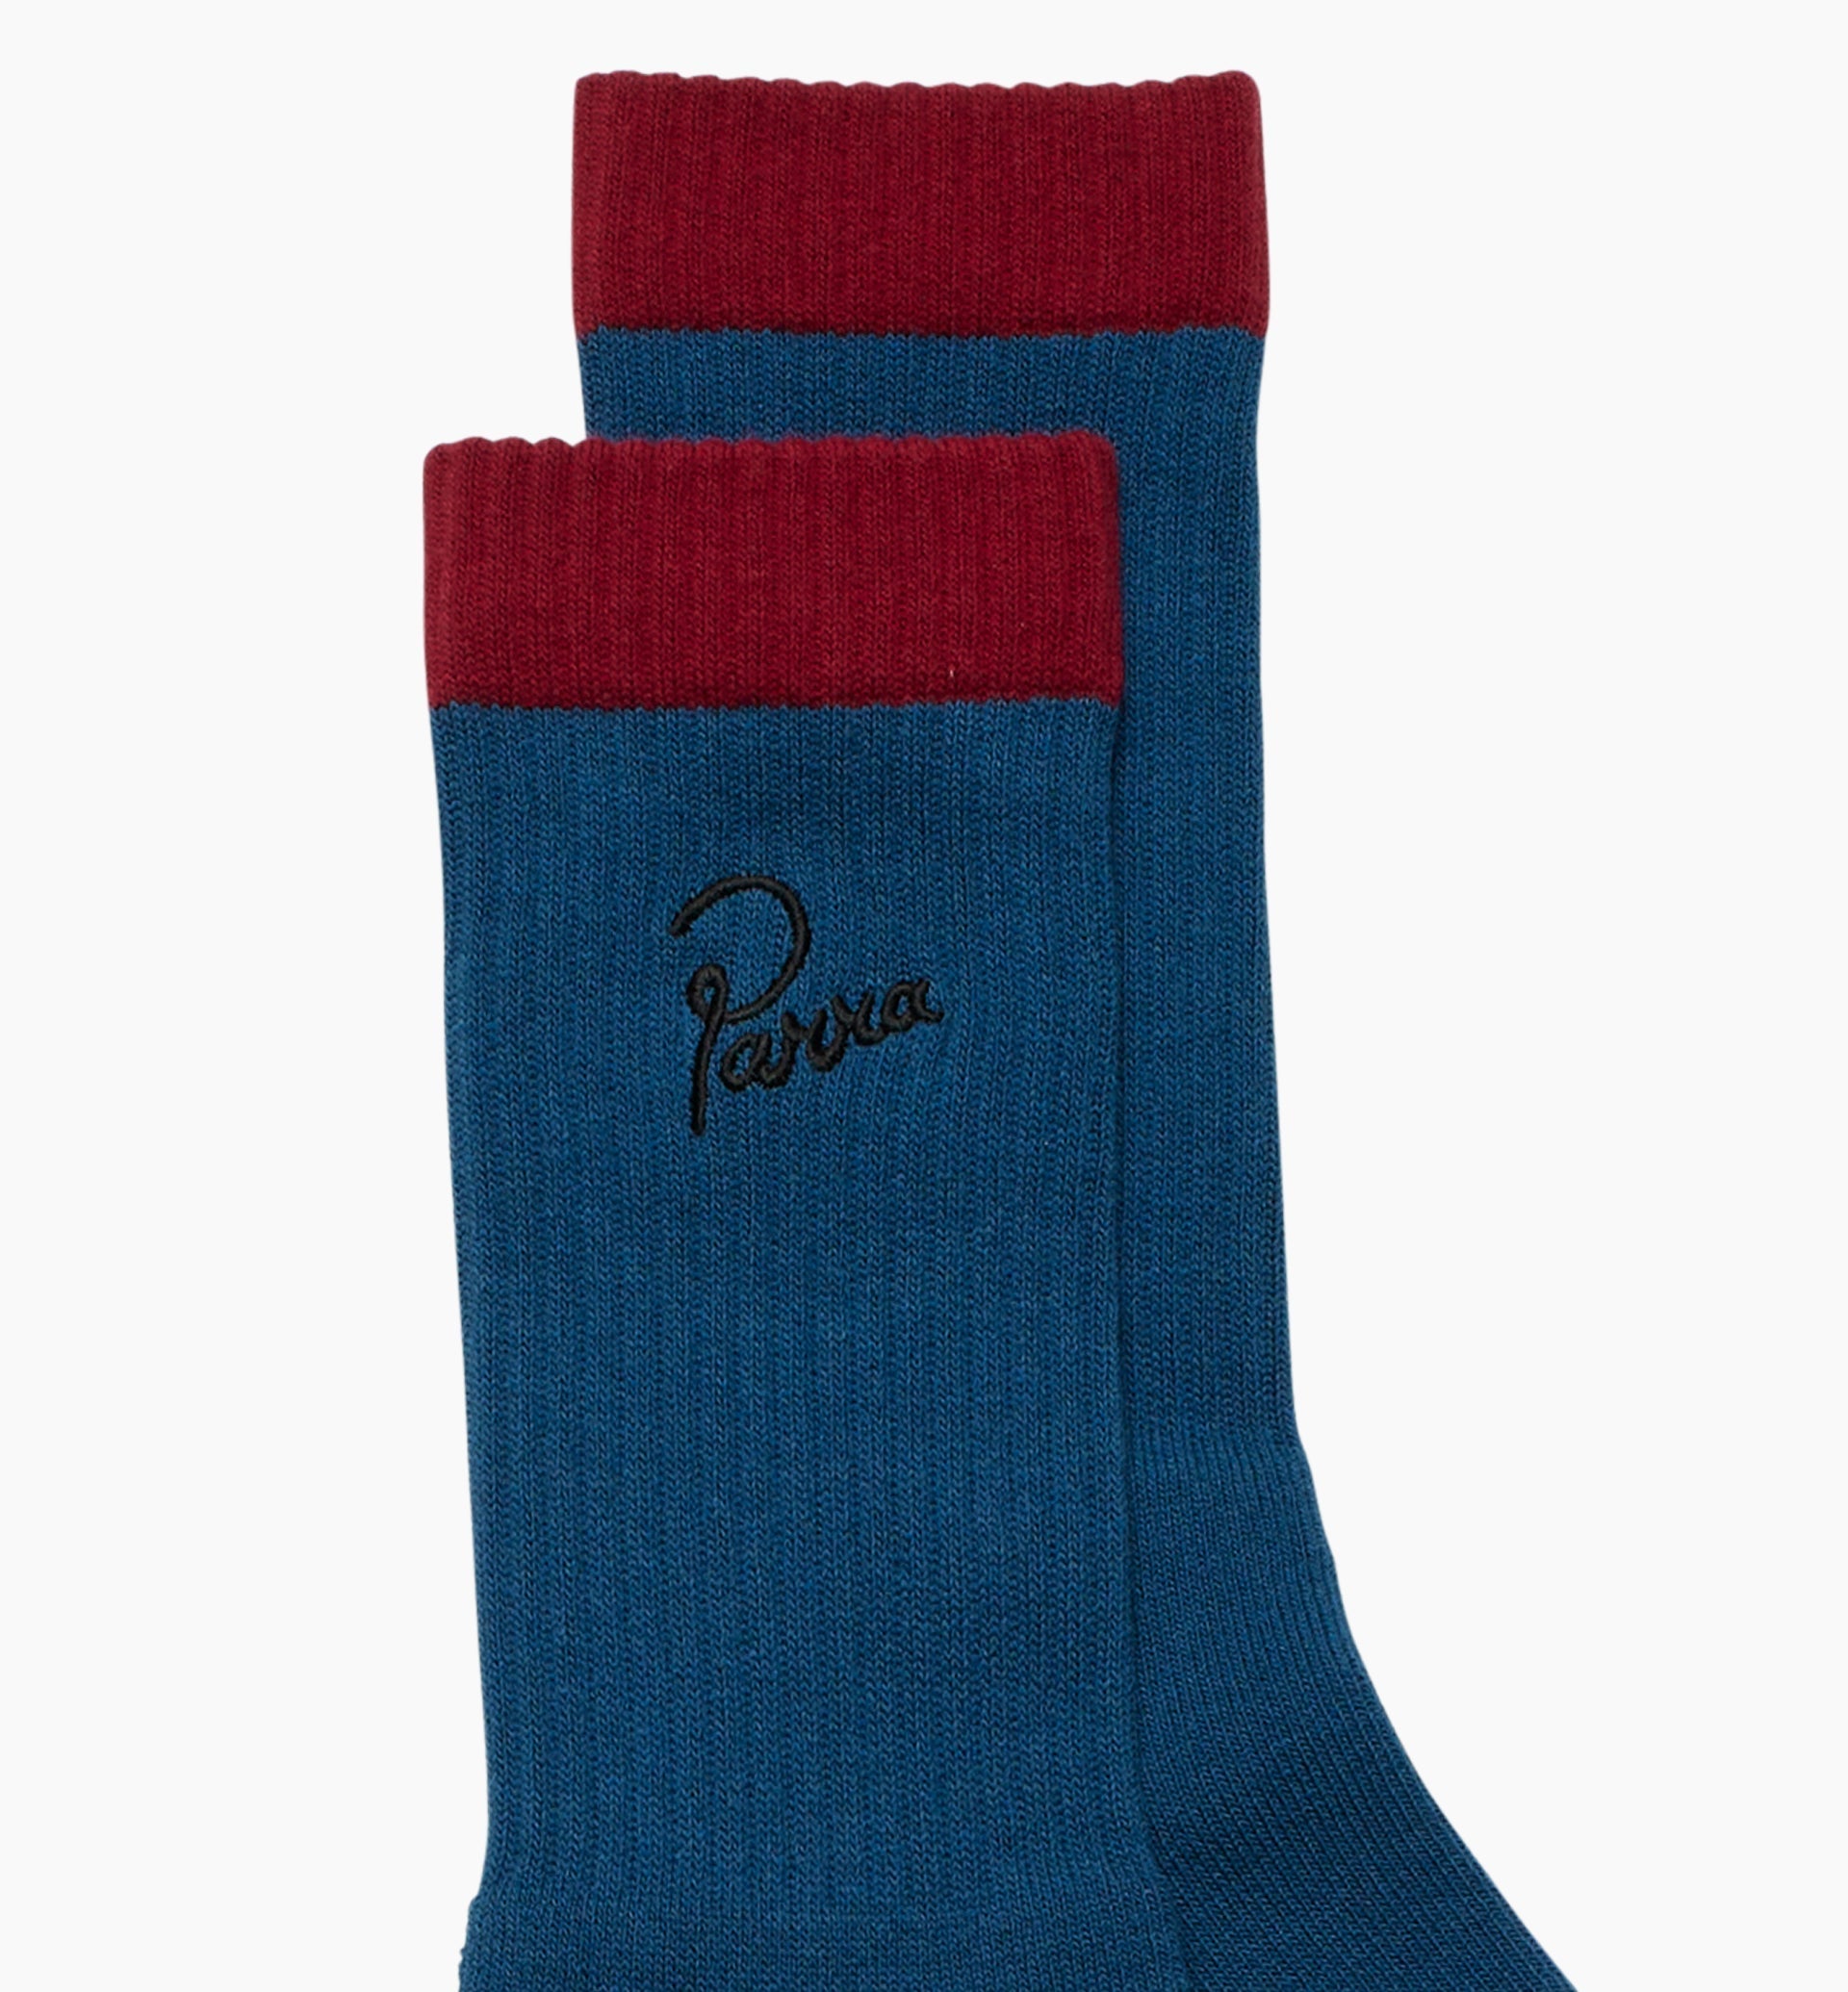 Parra - classic logo crew socks